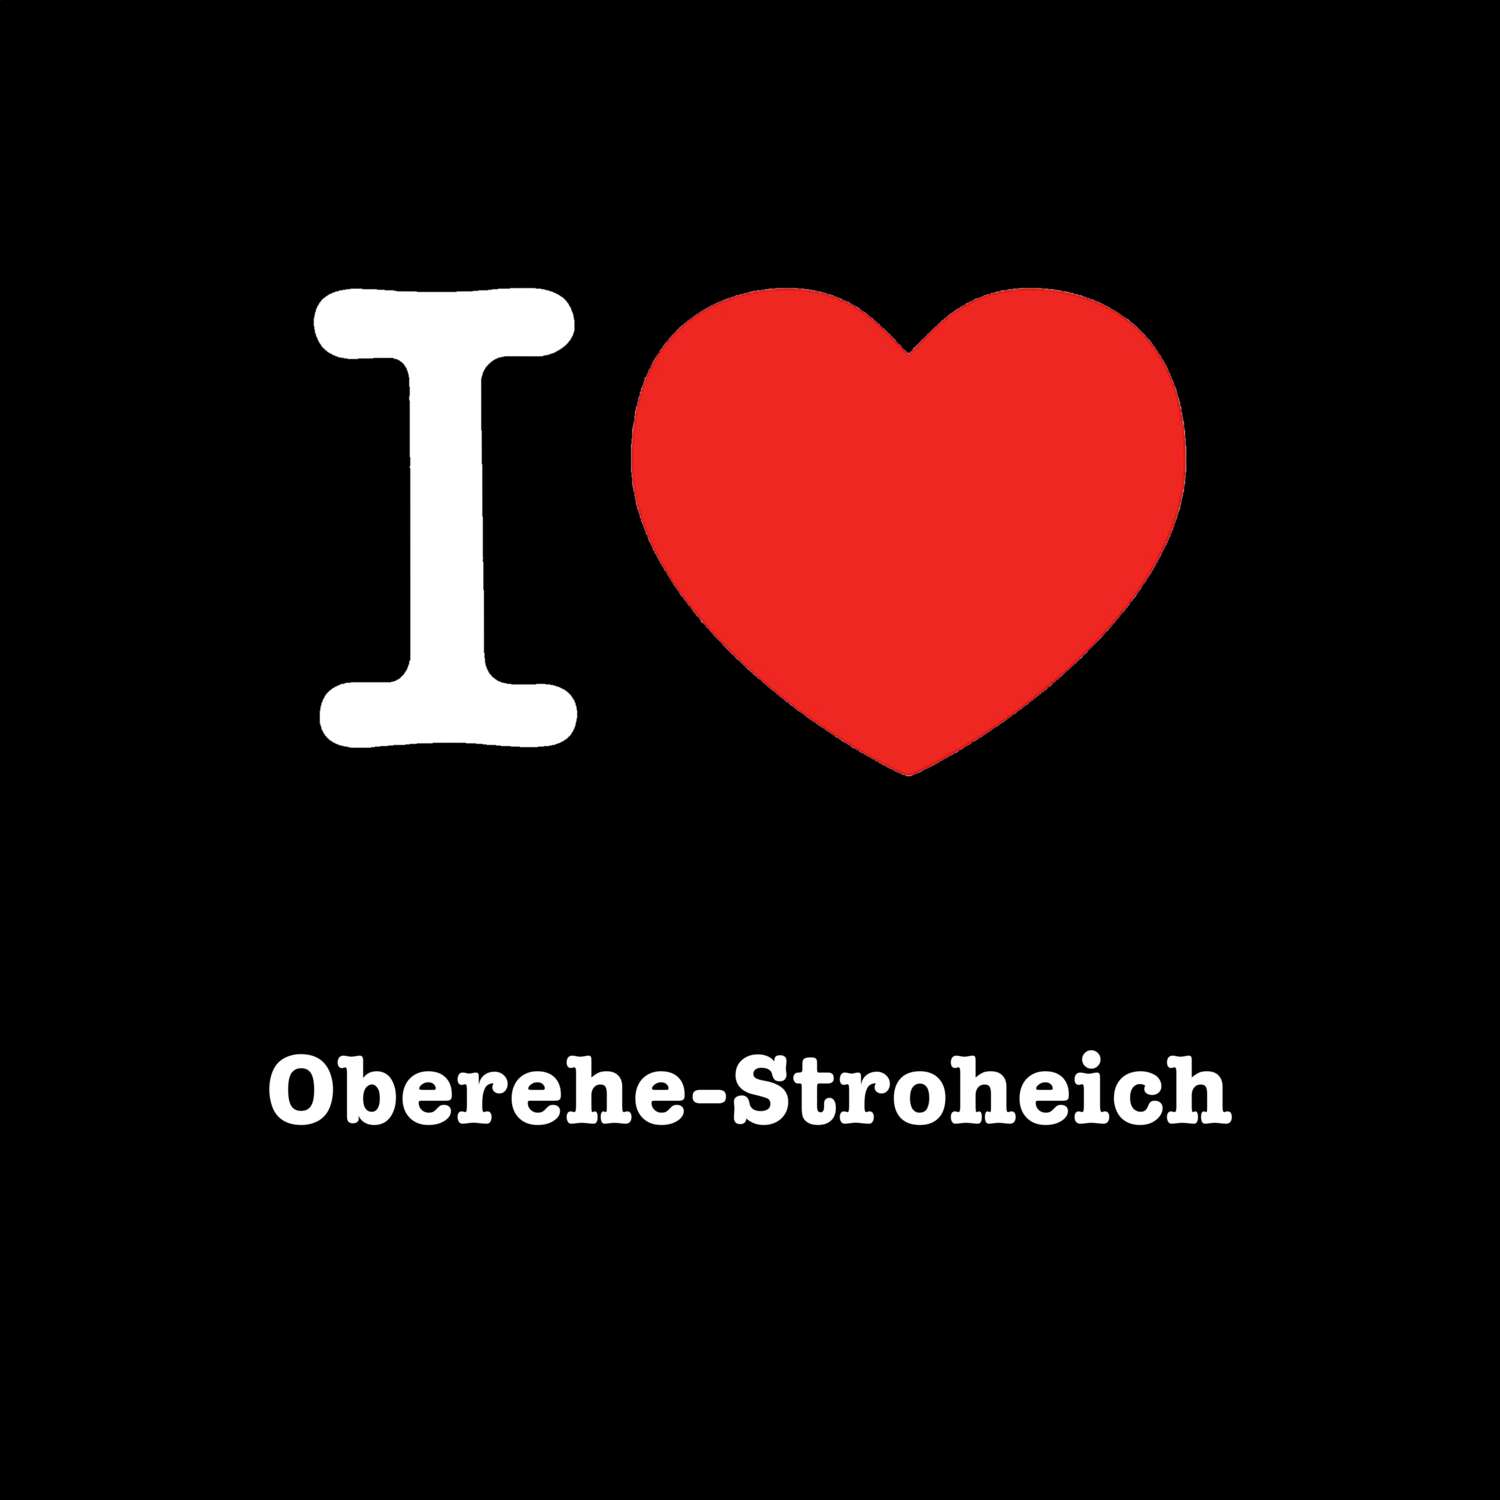 Oberehe-Stroheich T-Shirt »I love«